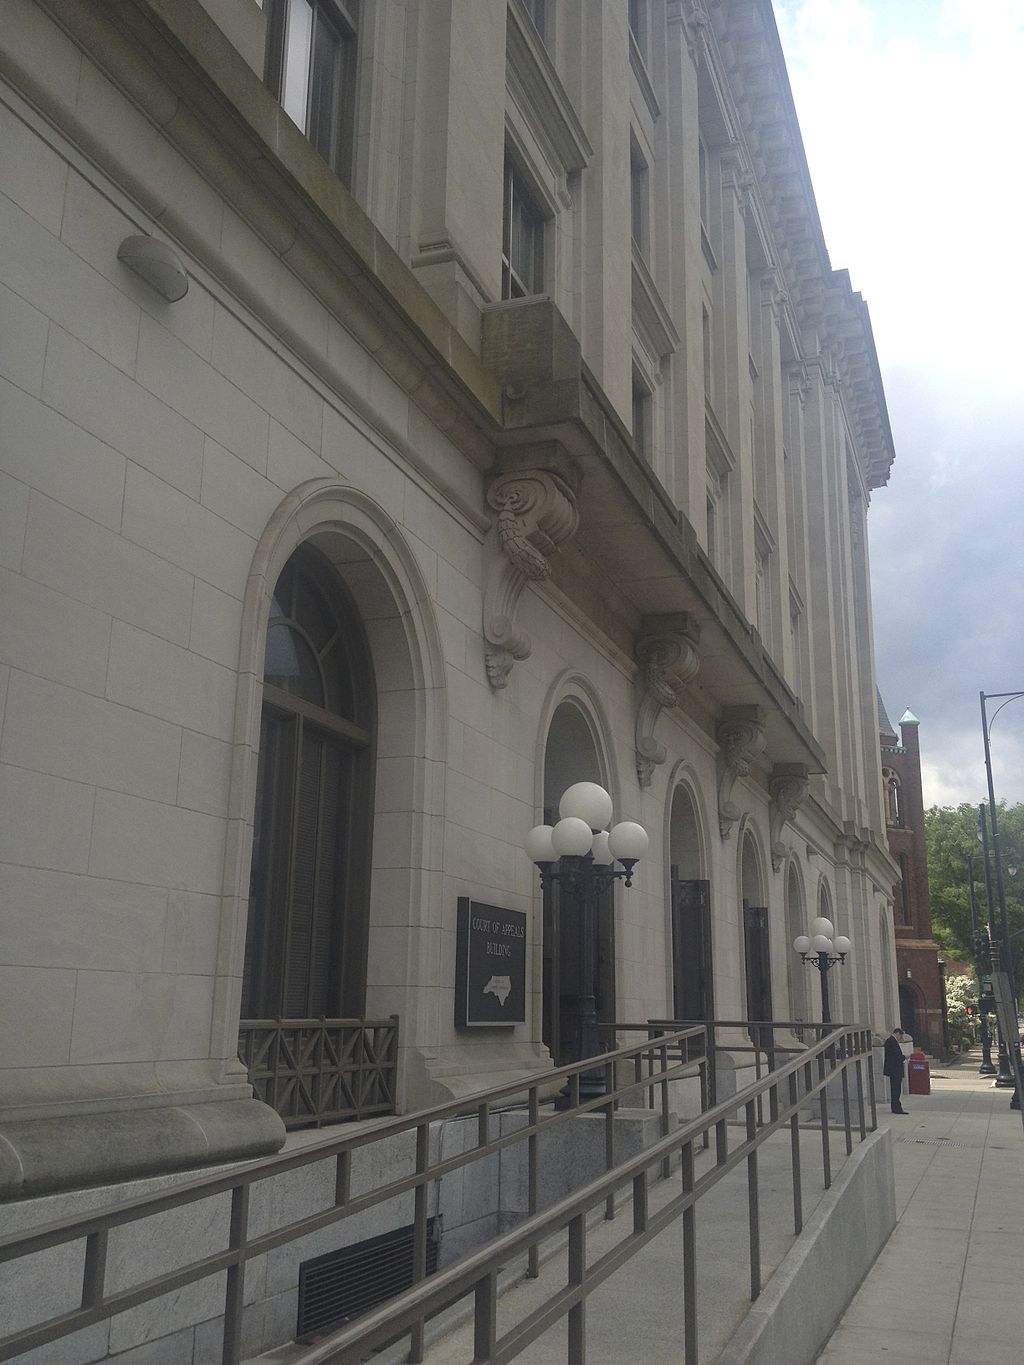 Court of Appeals Building